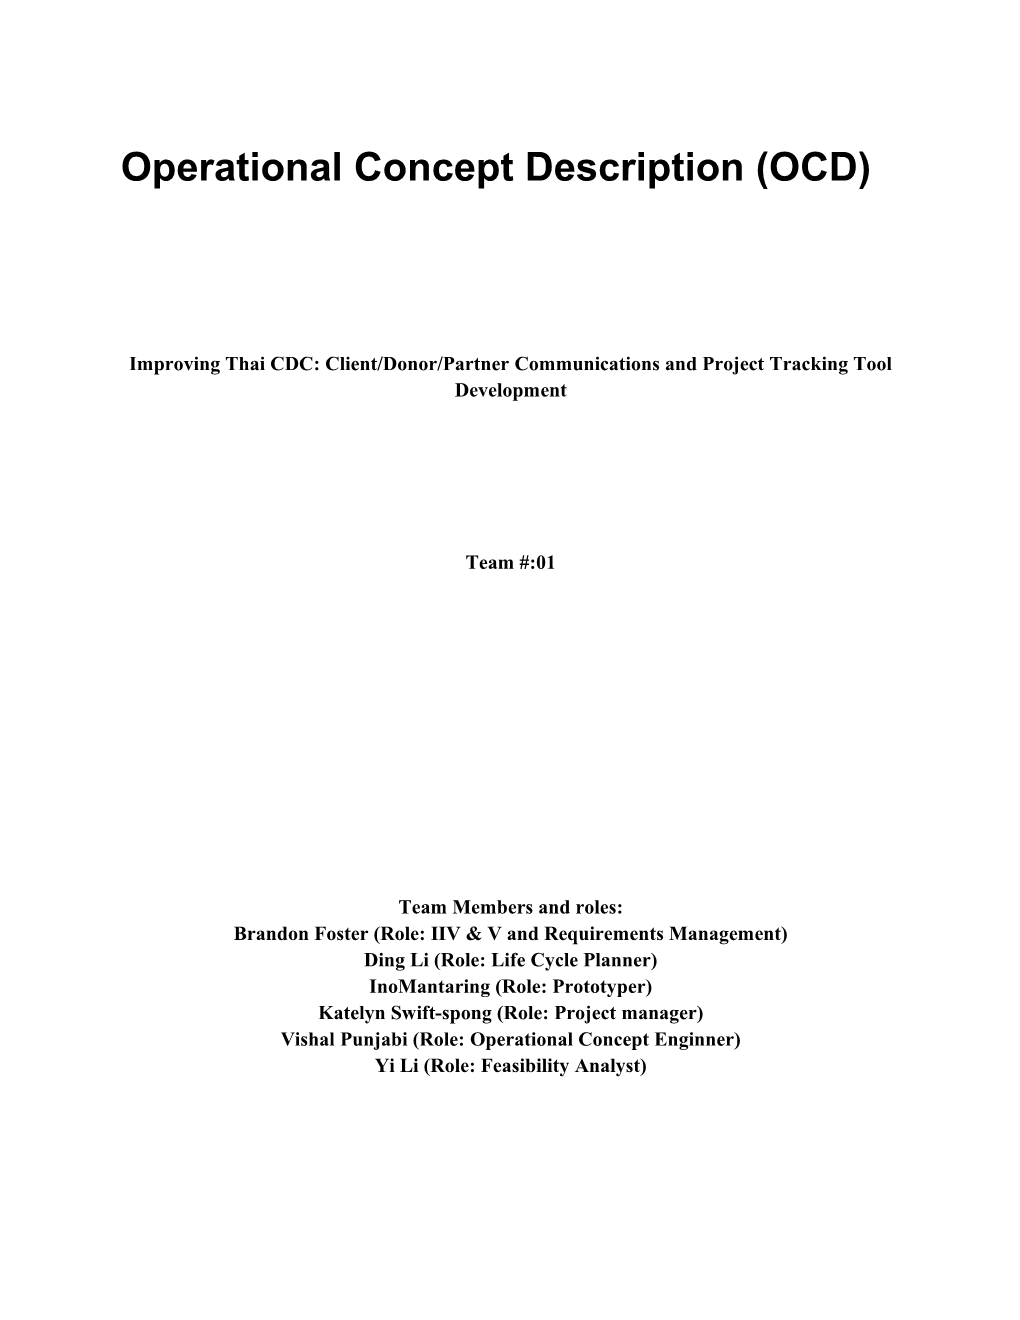 Operational Concept Description (OCD) for NDI/ Ncsversion No.: 1.2